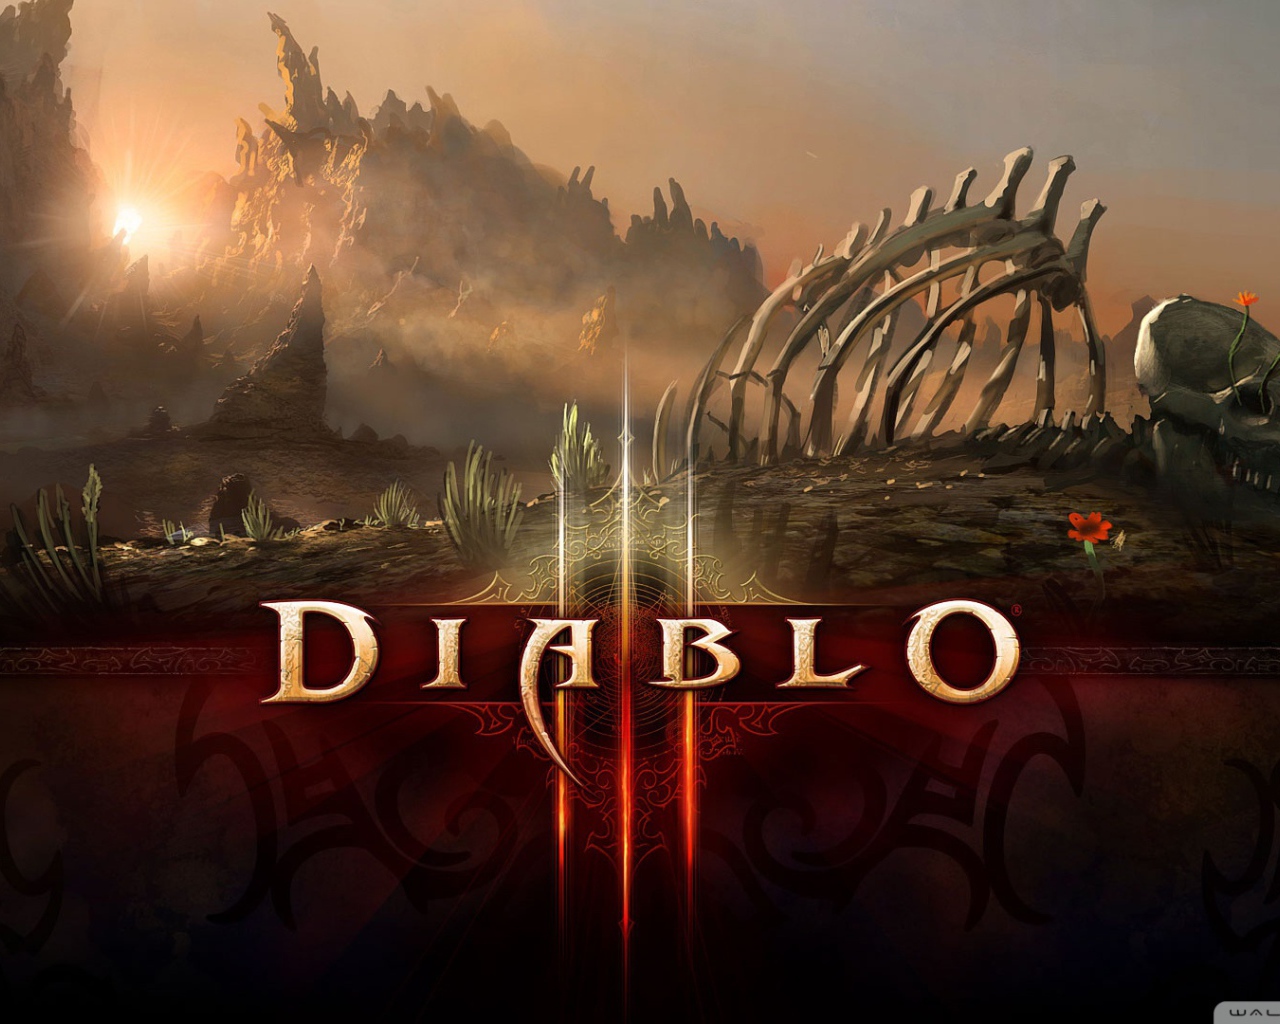  Diablo III: скелет дракона